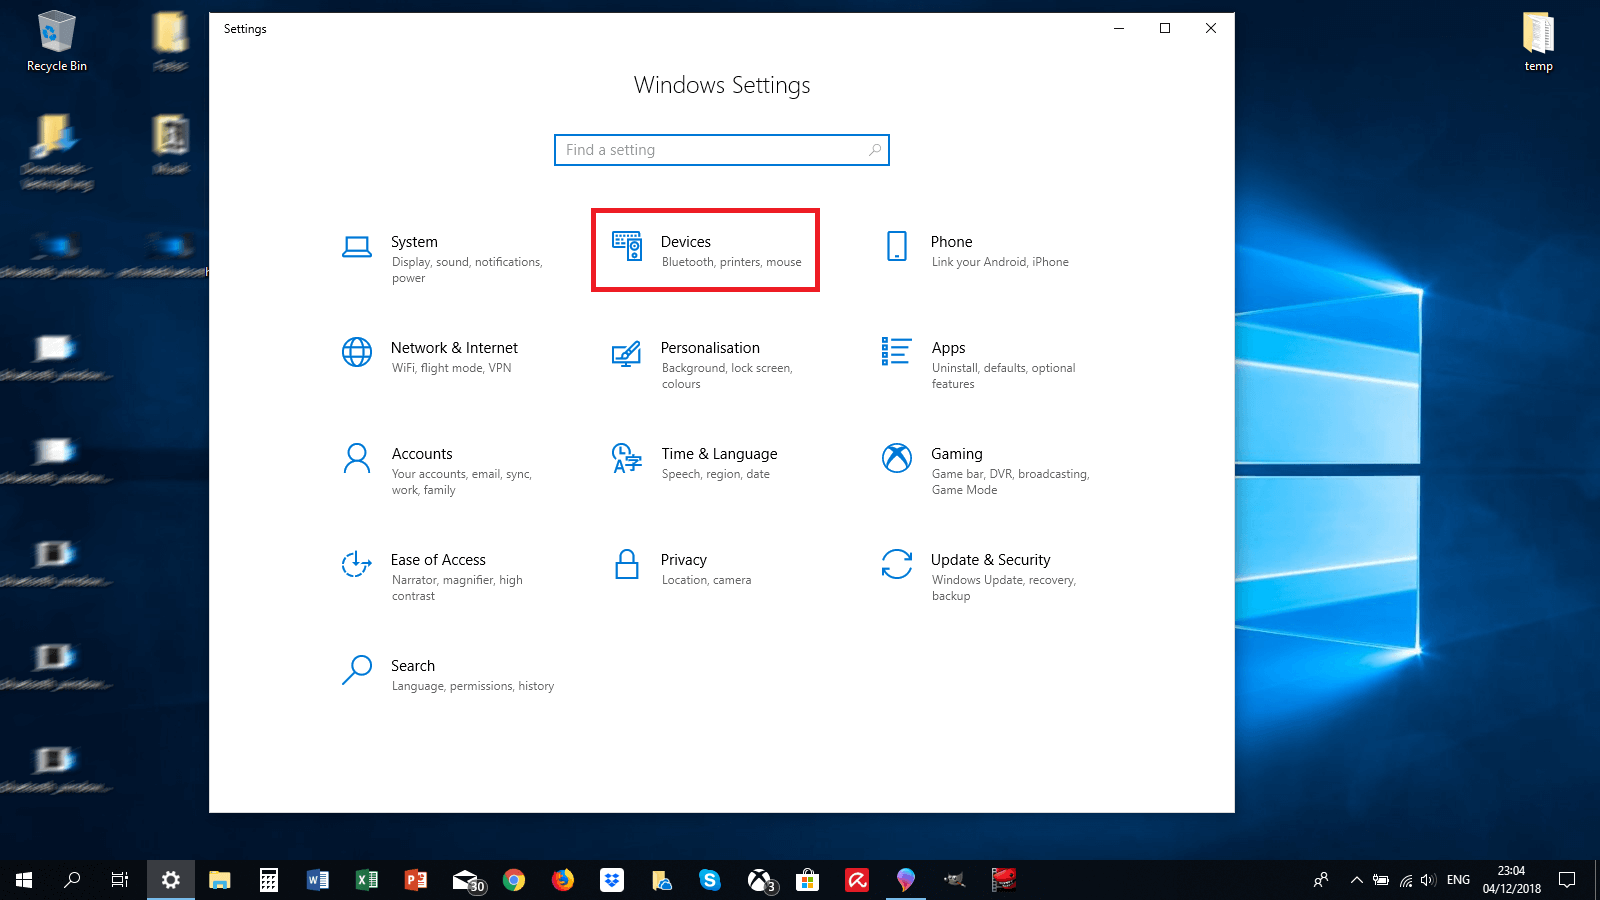 Settings in Windows 10